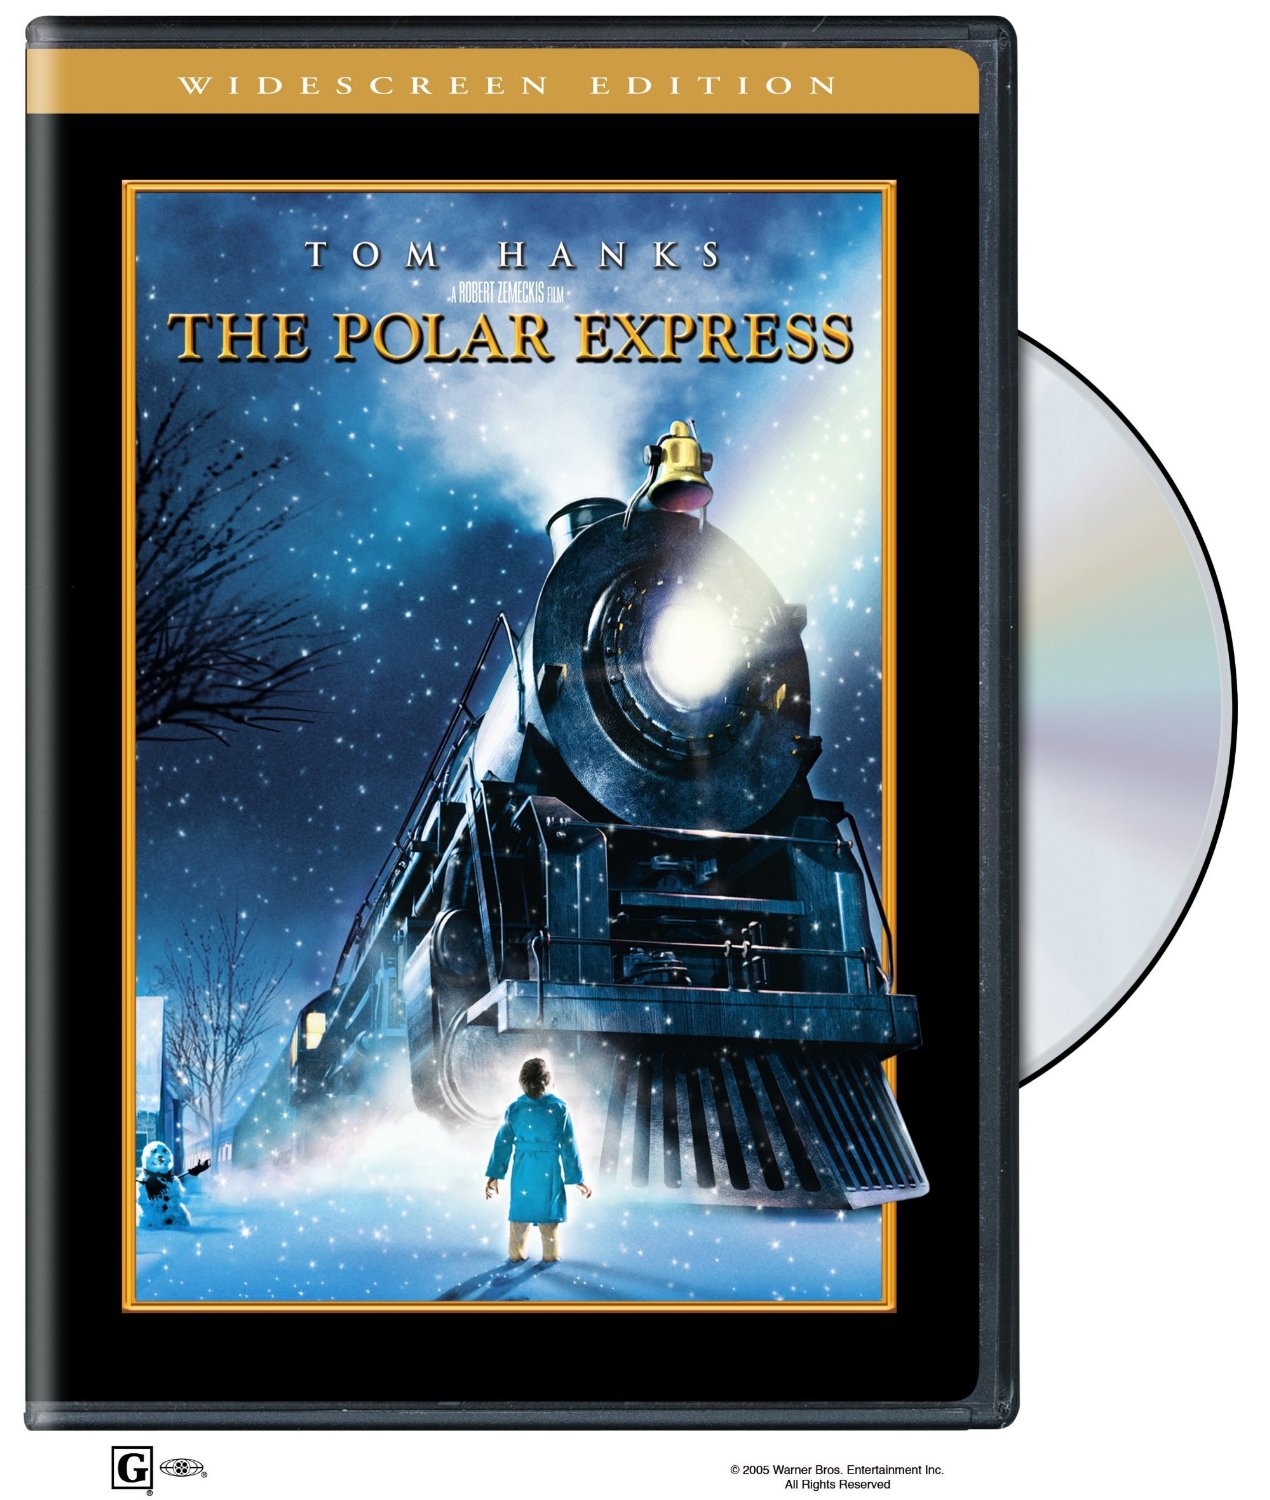 The Polar Express on DVD